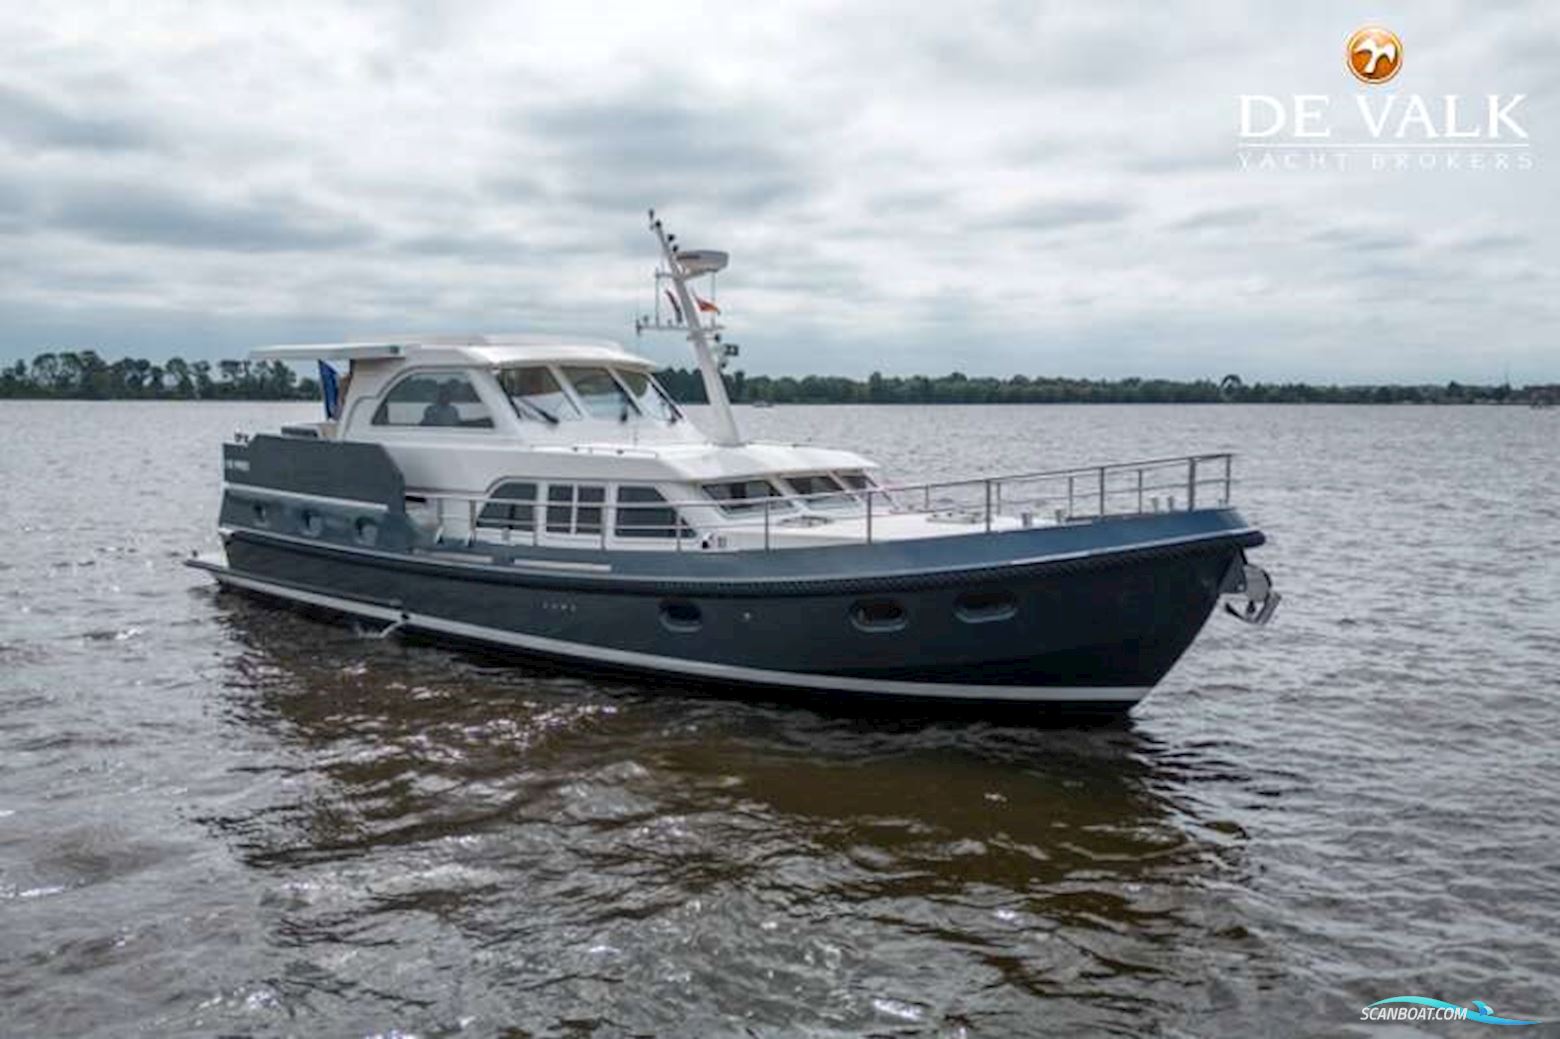 Linssen GS 500 Wheelhouse Custom Motorboot 2015, mit Vetus Deutz motor, Niederlande